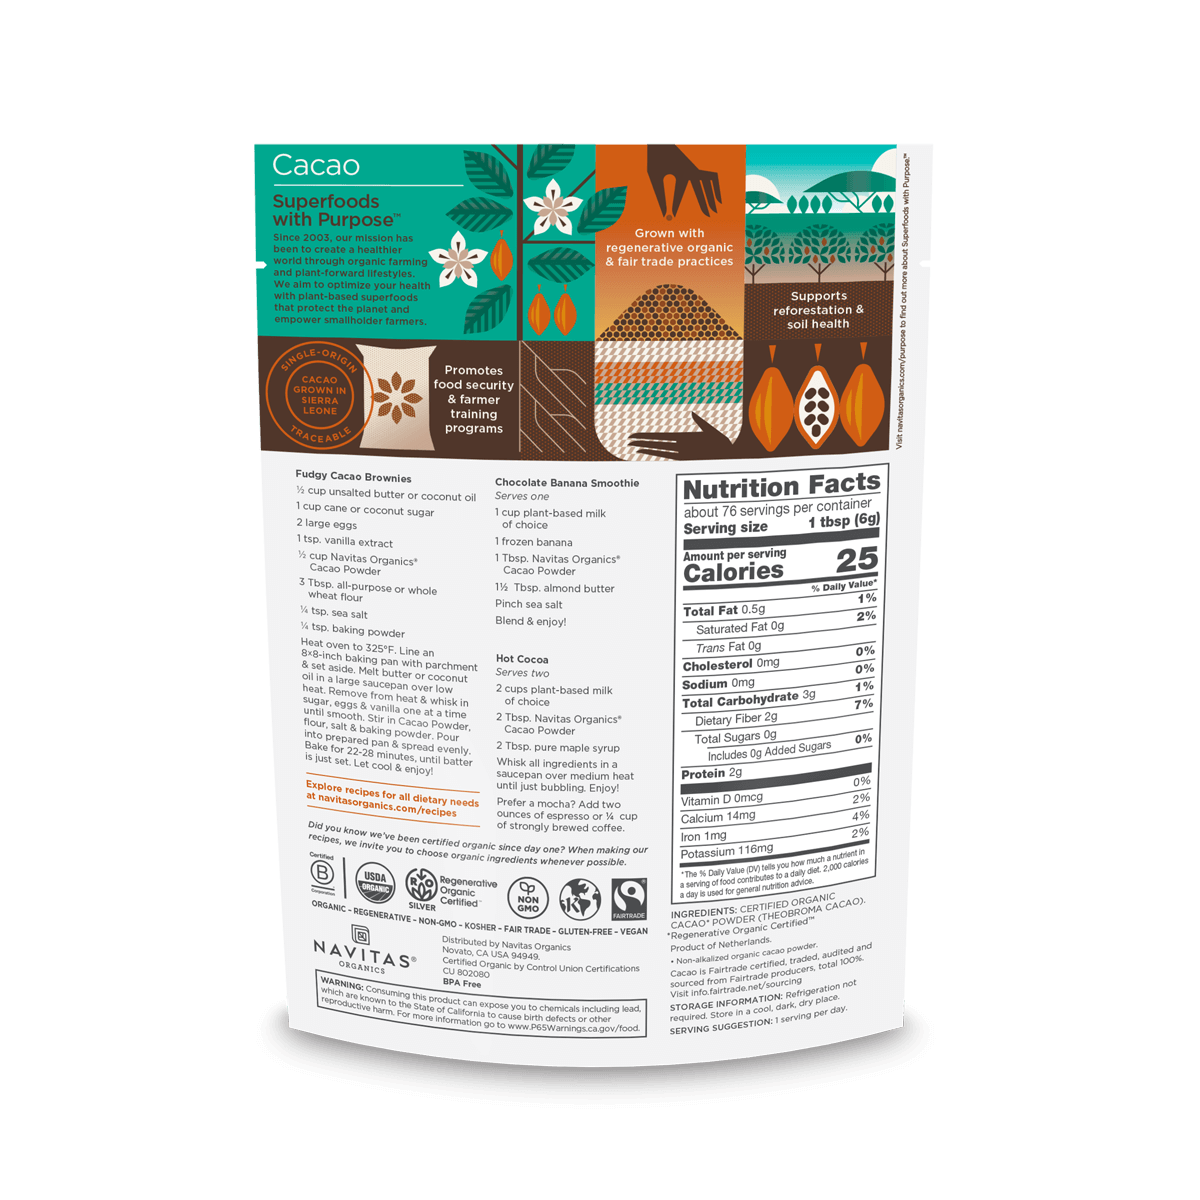 Navitas Organics Regenerative Organic Certified Cacao Powder 16oz. back of bag